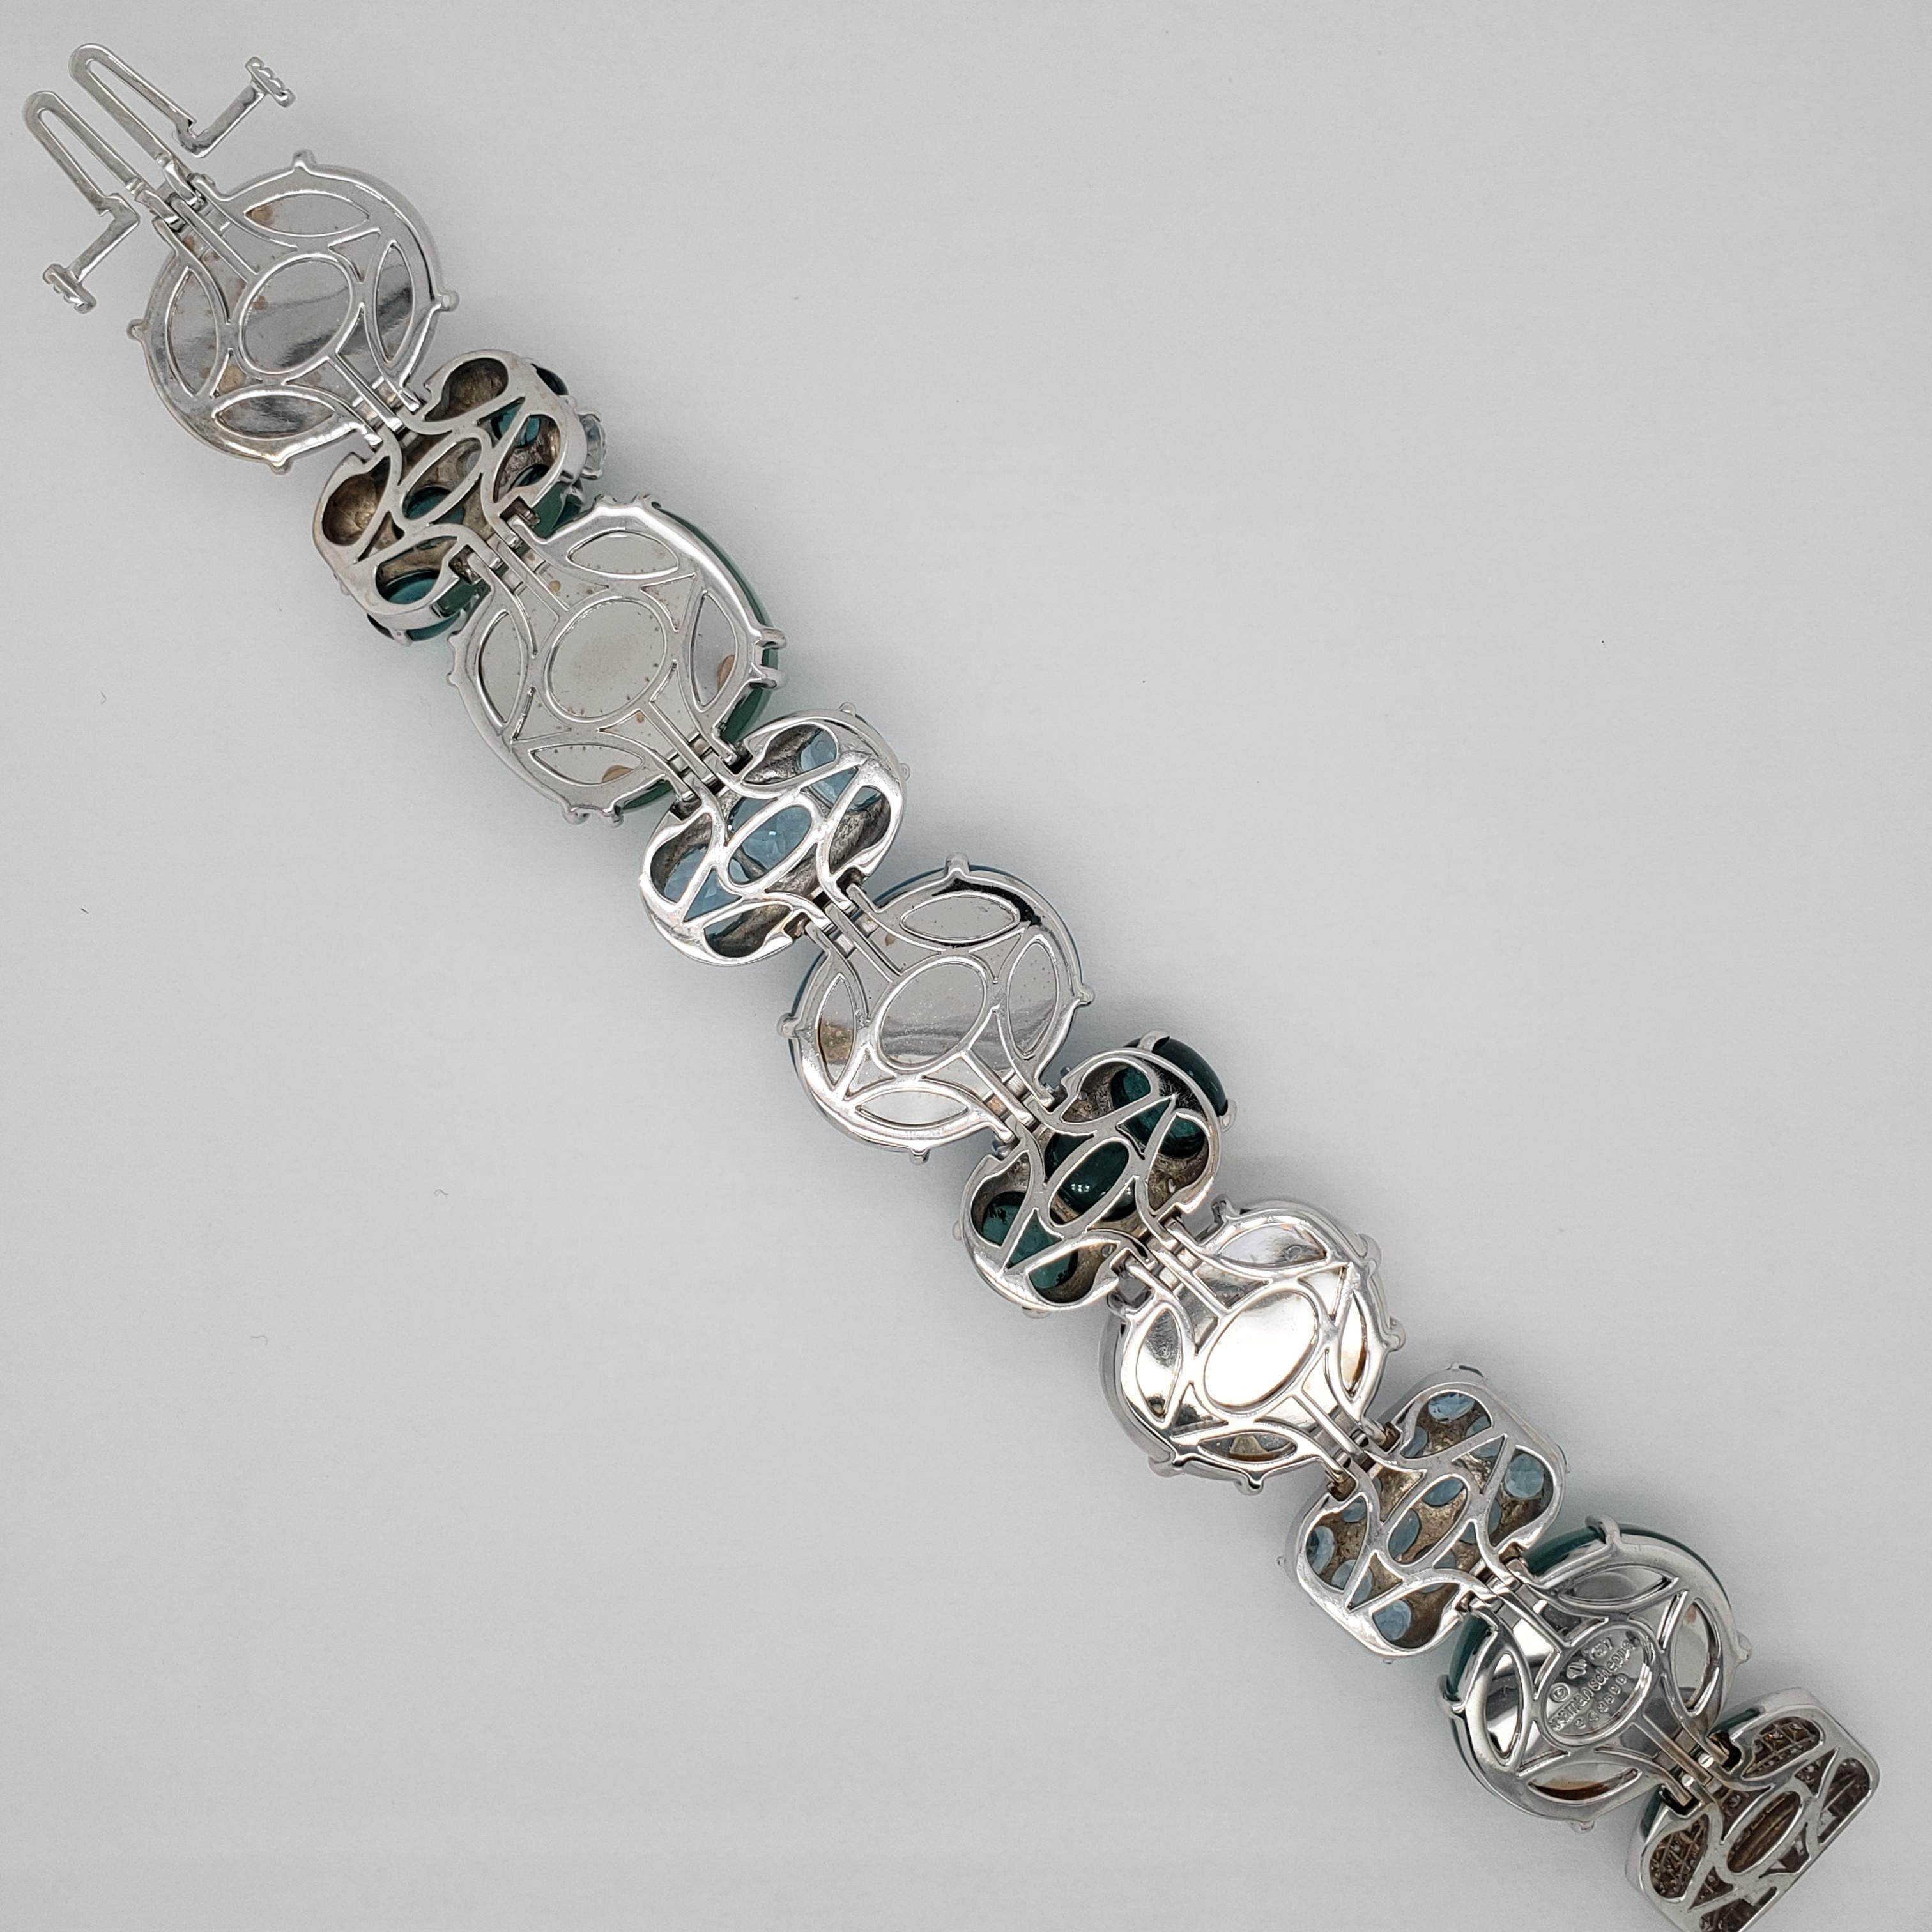 18k white gold Rio multi-gem & diamond bracelet. Crafted by well known designer Seaman Schepps

This bracelet has approx. 2.20cts of diamonds. 
Multiple blue toned gemstones. 
-Beryl
-Prenite
-Aquamarine
-Tourmaline
-Rainbow